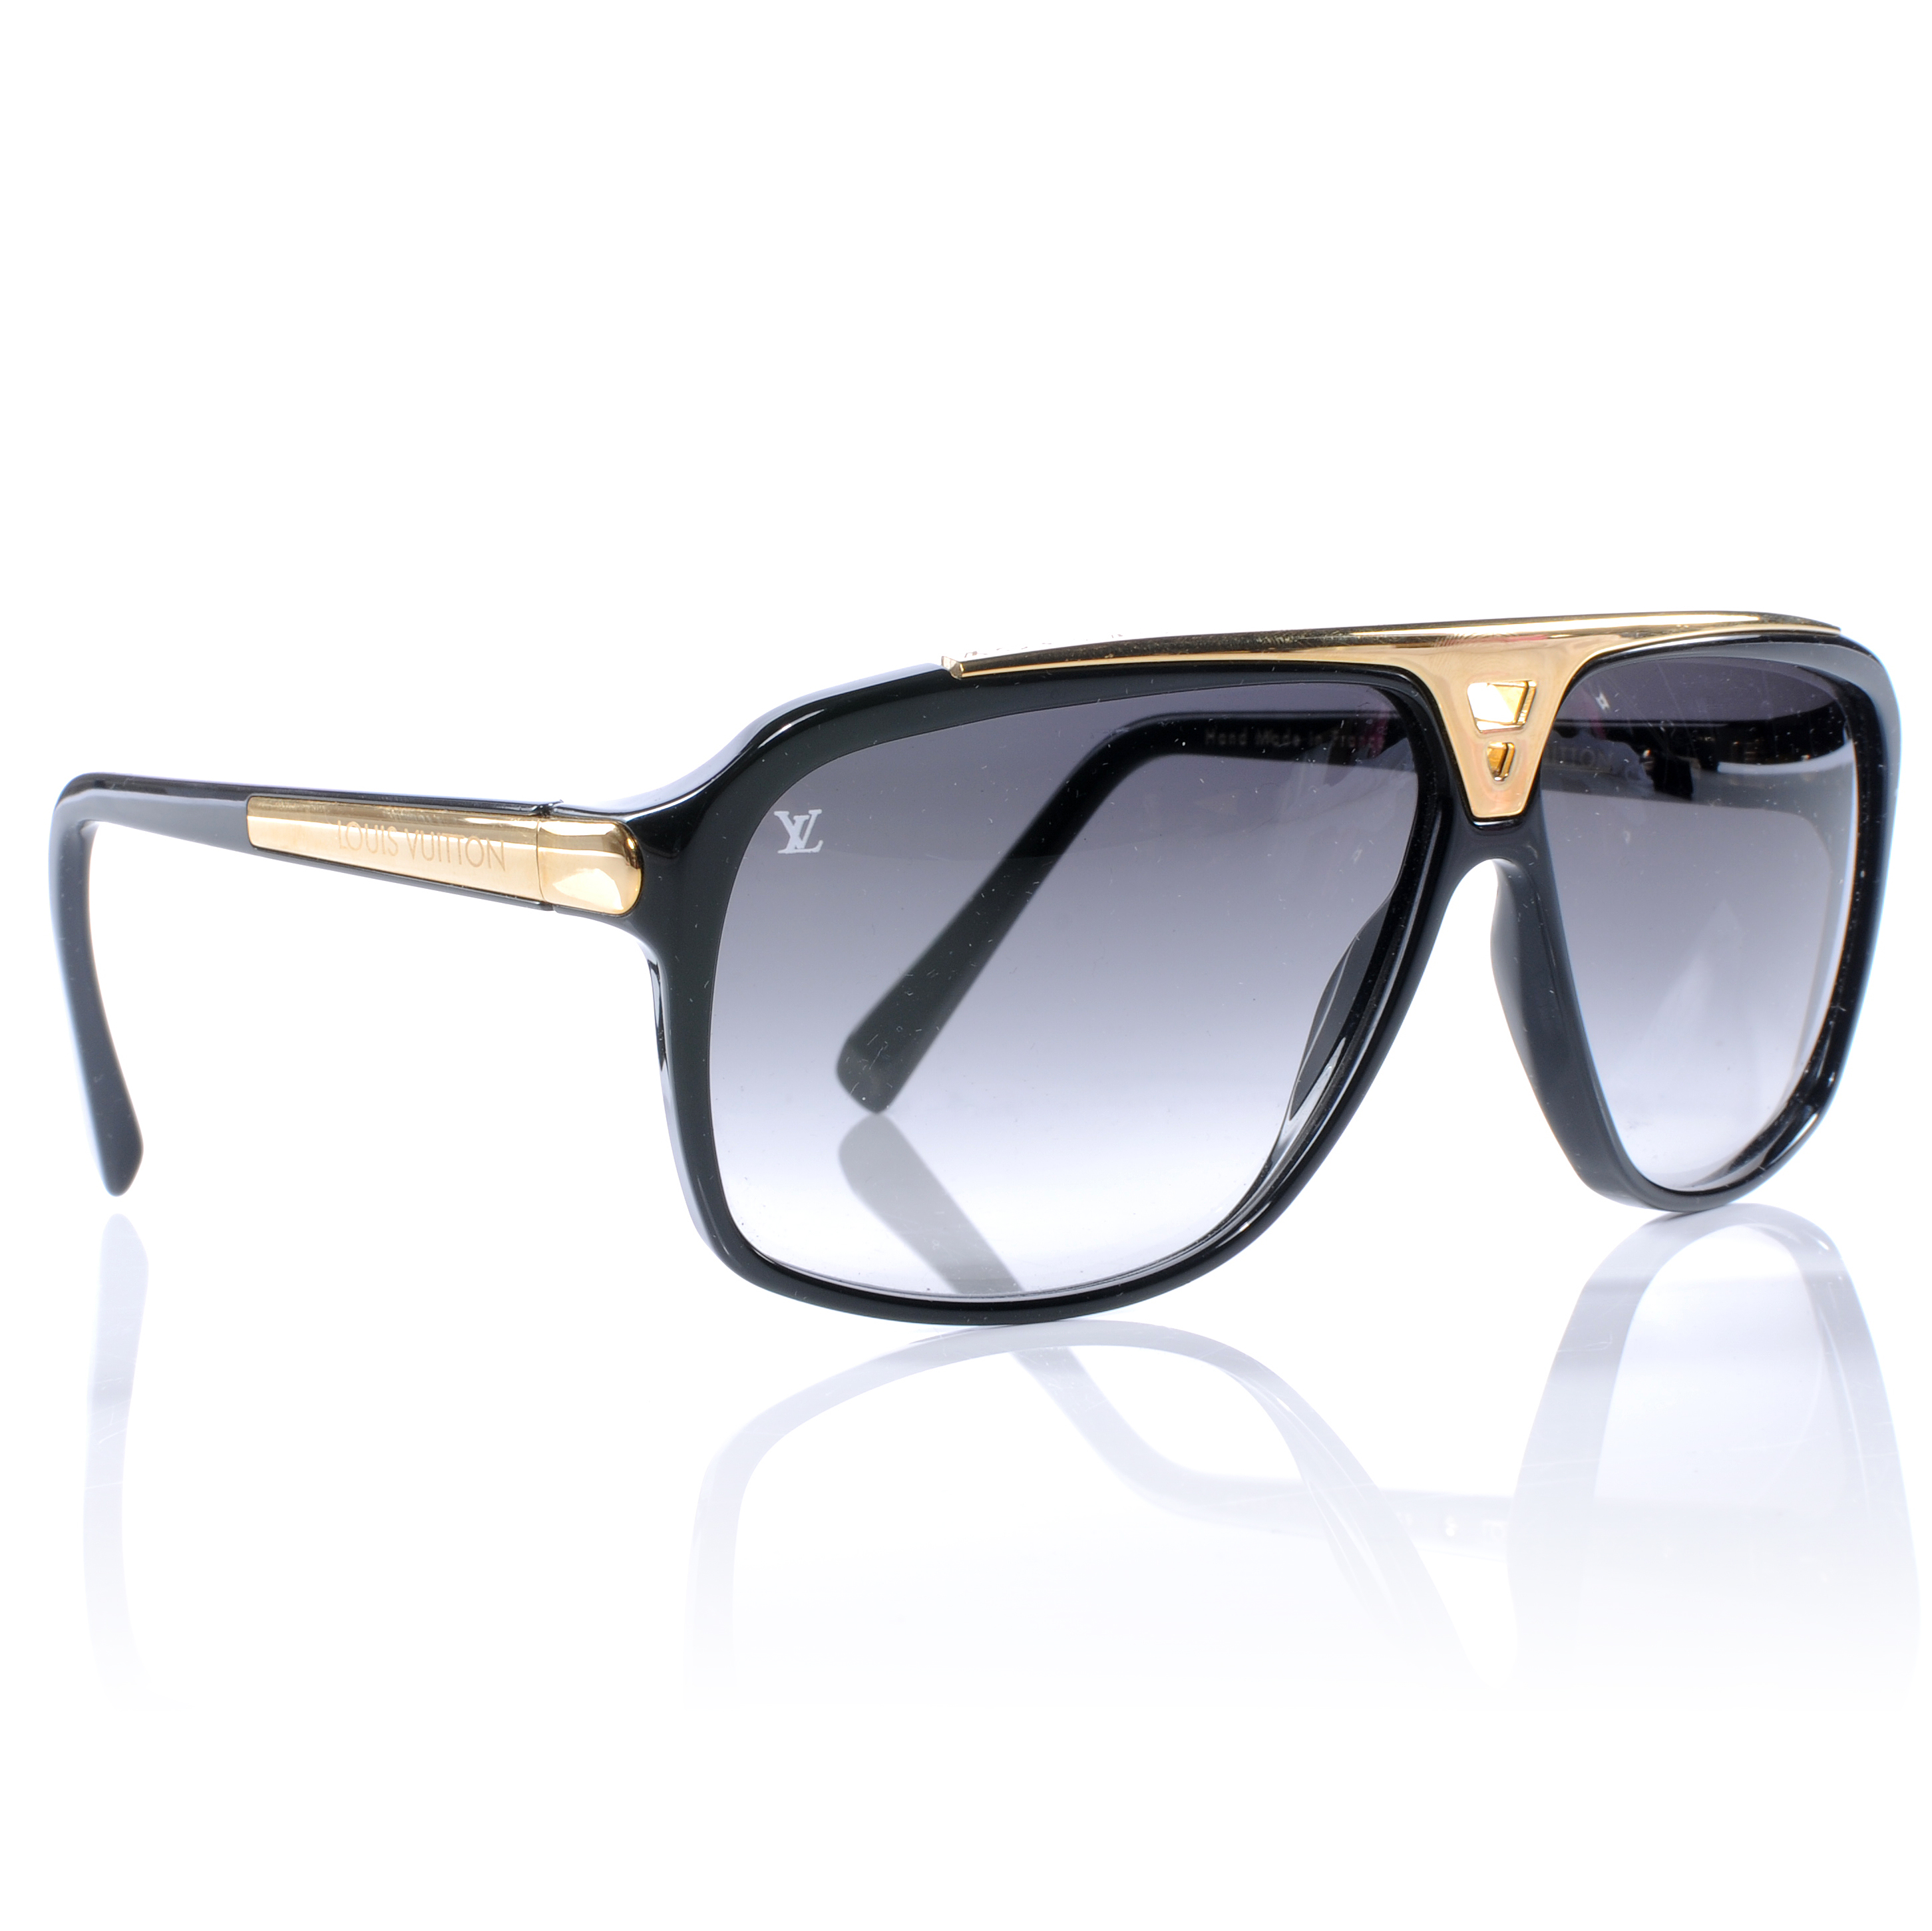 Louis Vuitton Evidence Sunglasses Authentic Mexican